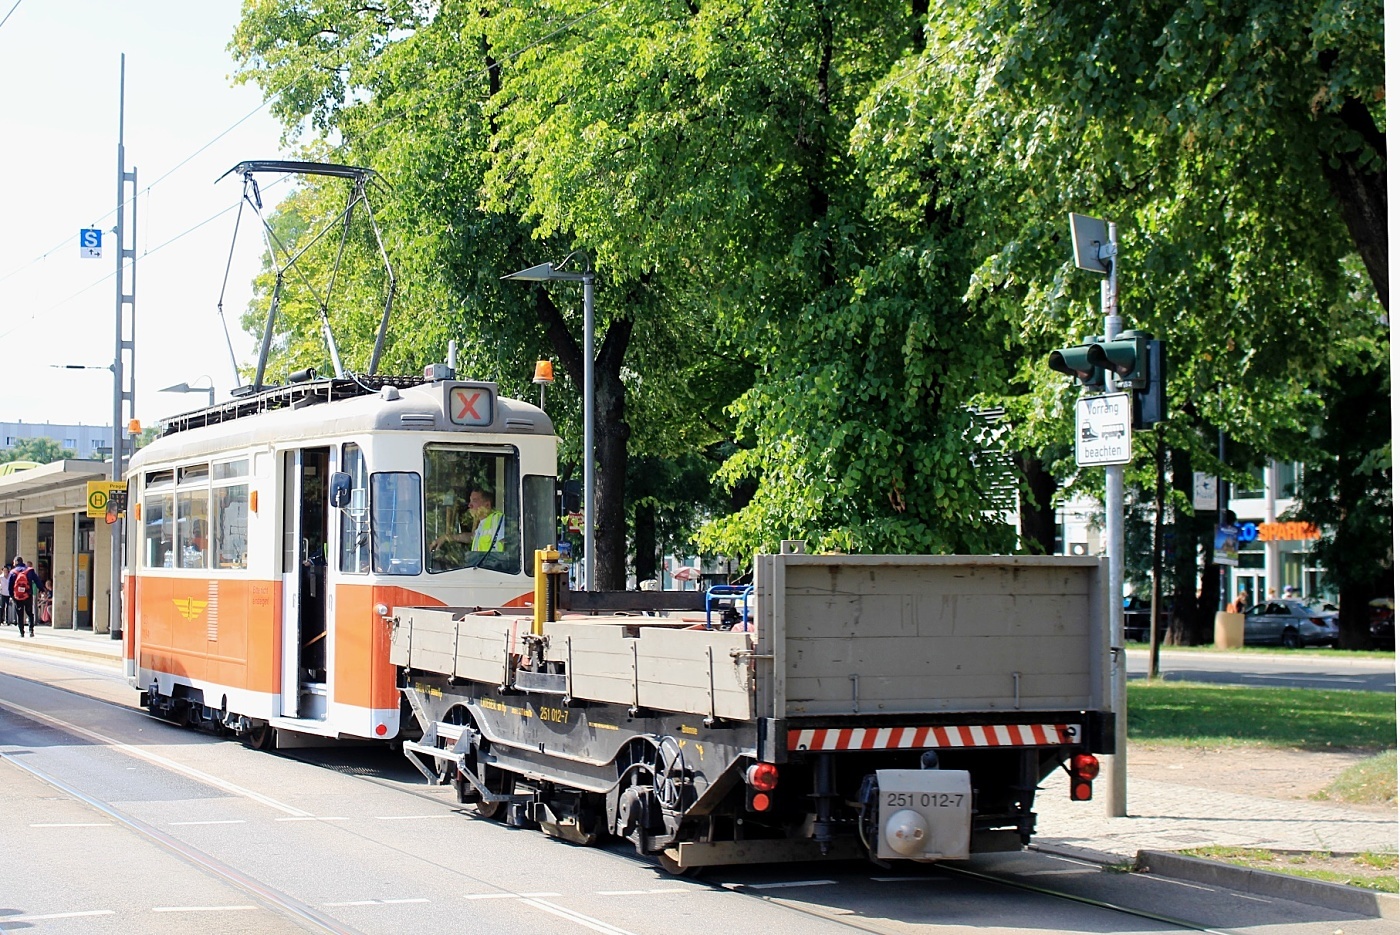 2-axle service tram #251 012